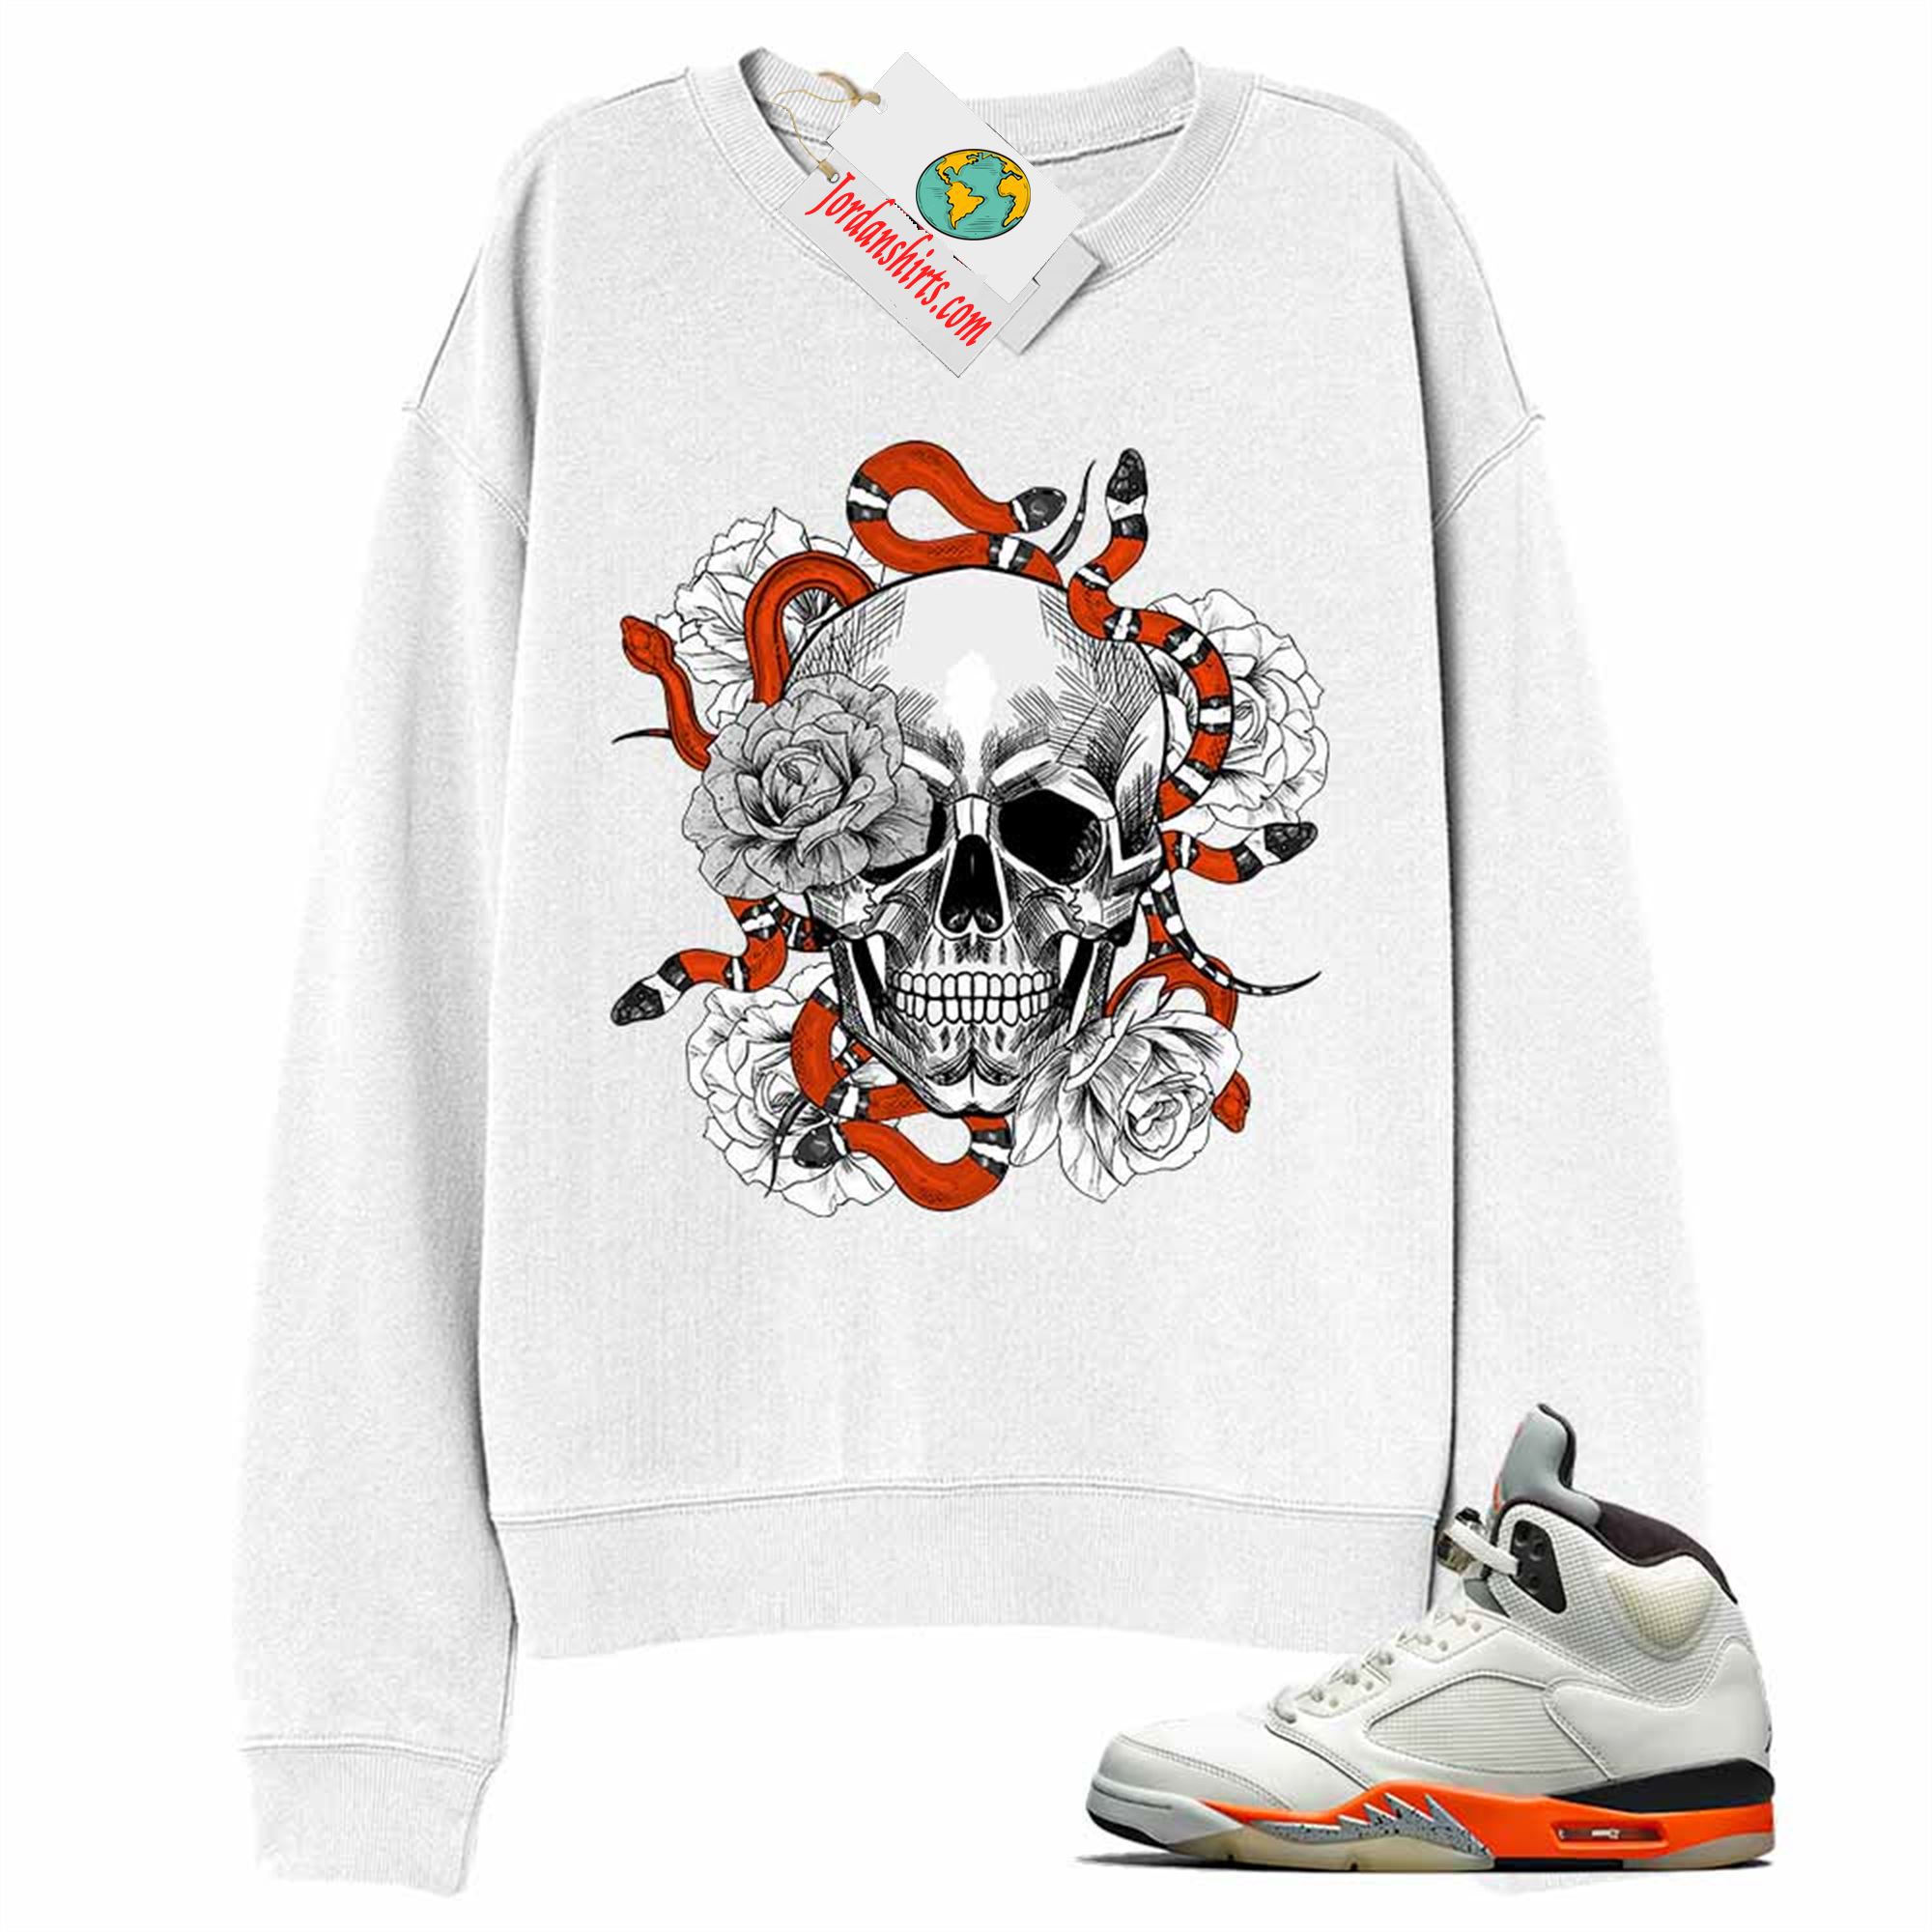 Jordan 5 Sweatshirt, Snake Skull Rose White Sweatshirt Air Jordan 5 Orange Blaze Shattered Backboard 5s Full Size Up To 5xl